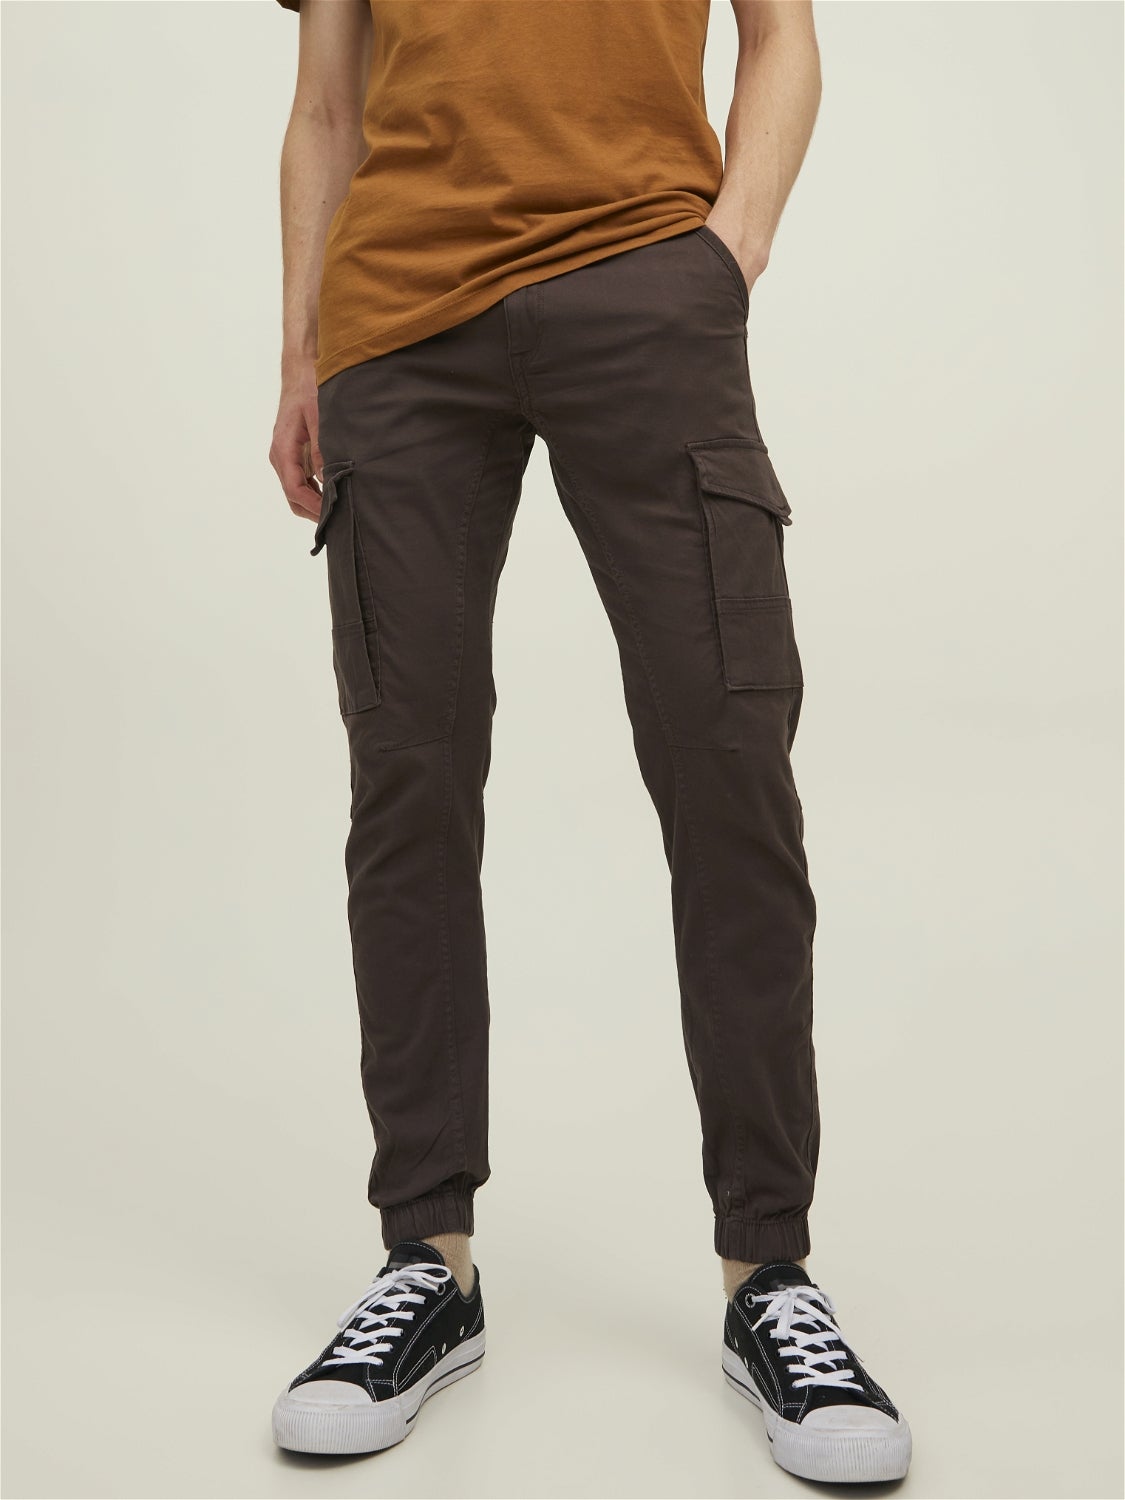 MEN FASHION Trousers Elegant Brown M discount 64% Jack & Jones slacks 